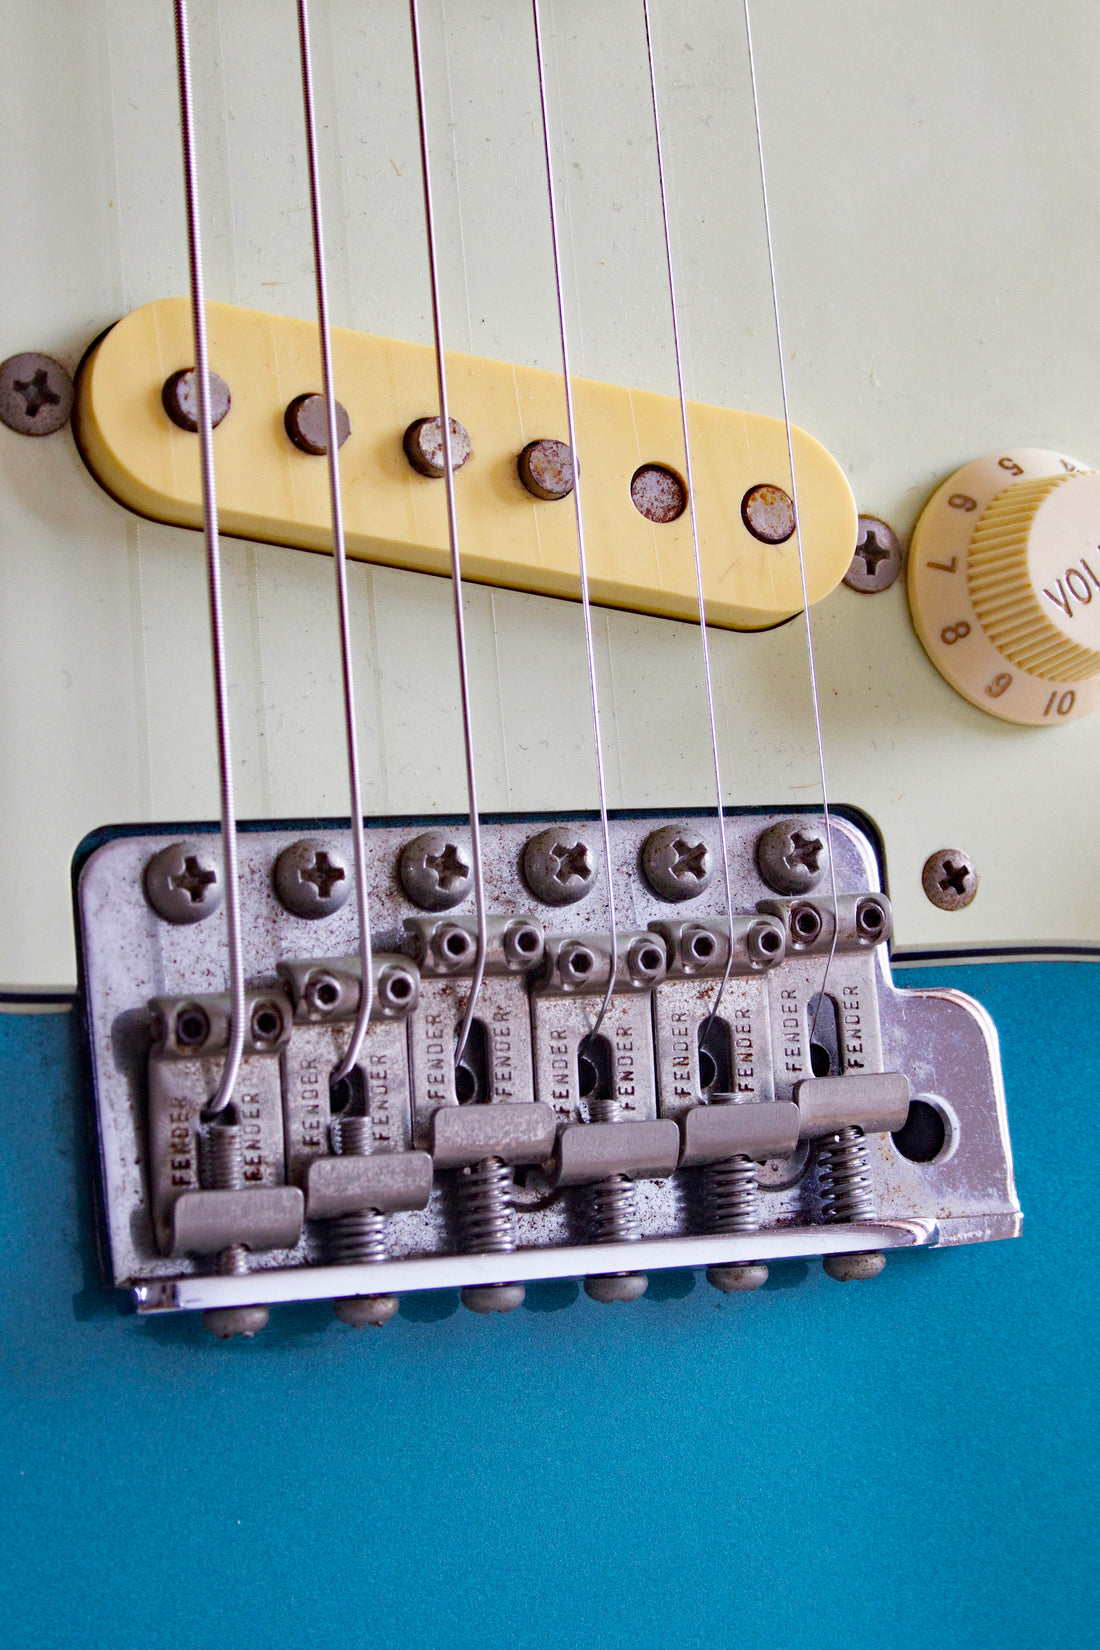 Texas　Ocean　Metalli　'62　Fender　Instruments　–　Stratocaster　Reissue　Turquoise　Specials　Topshelf